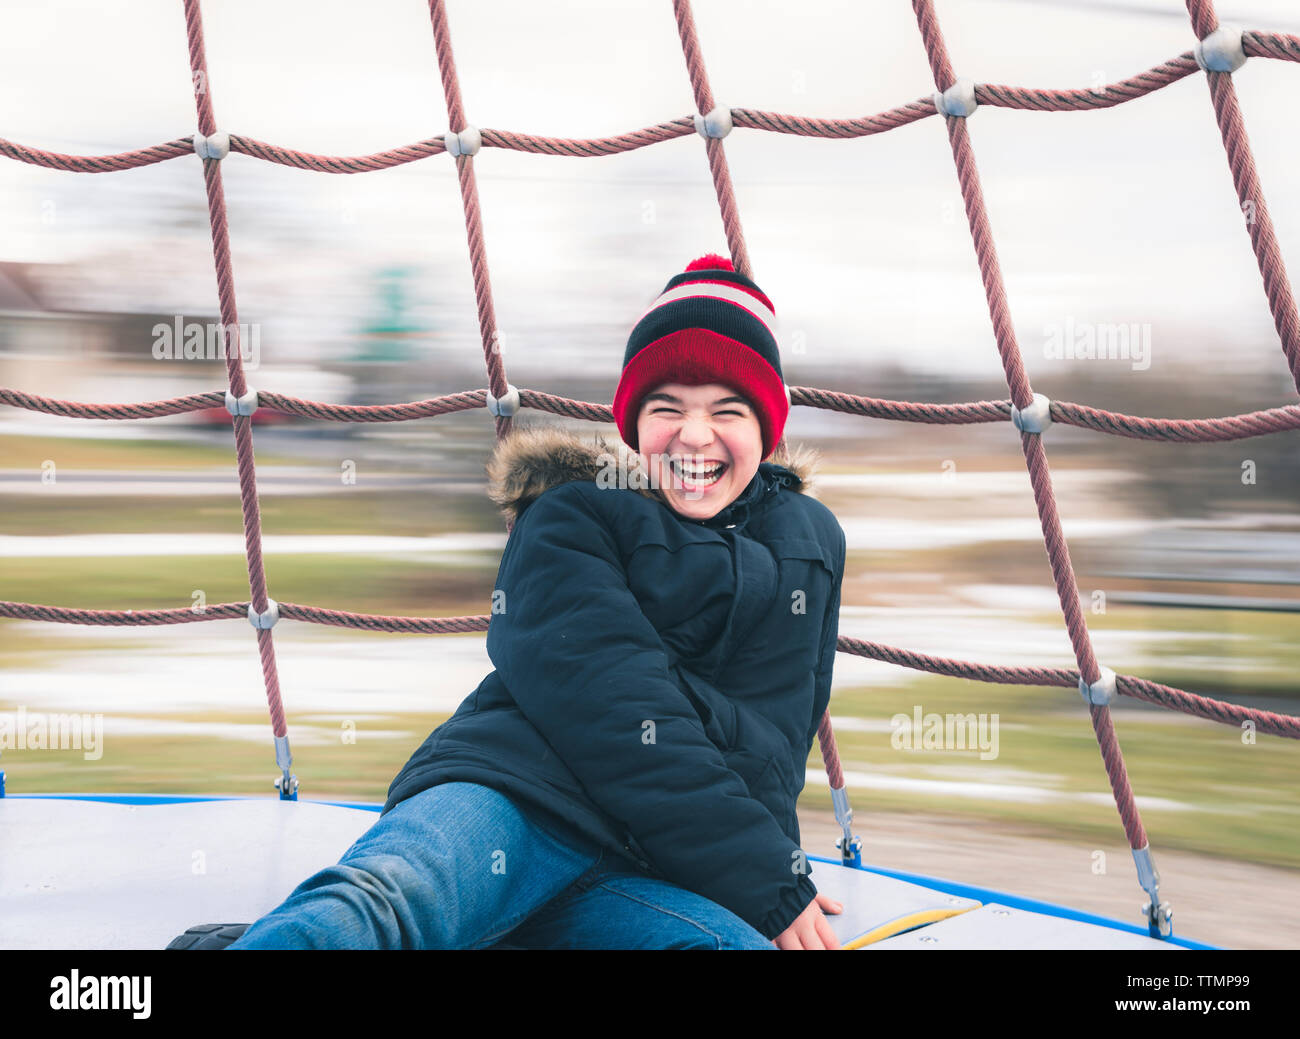 Happy boy enjoying in merry-go-round at playground Stock Photo